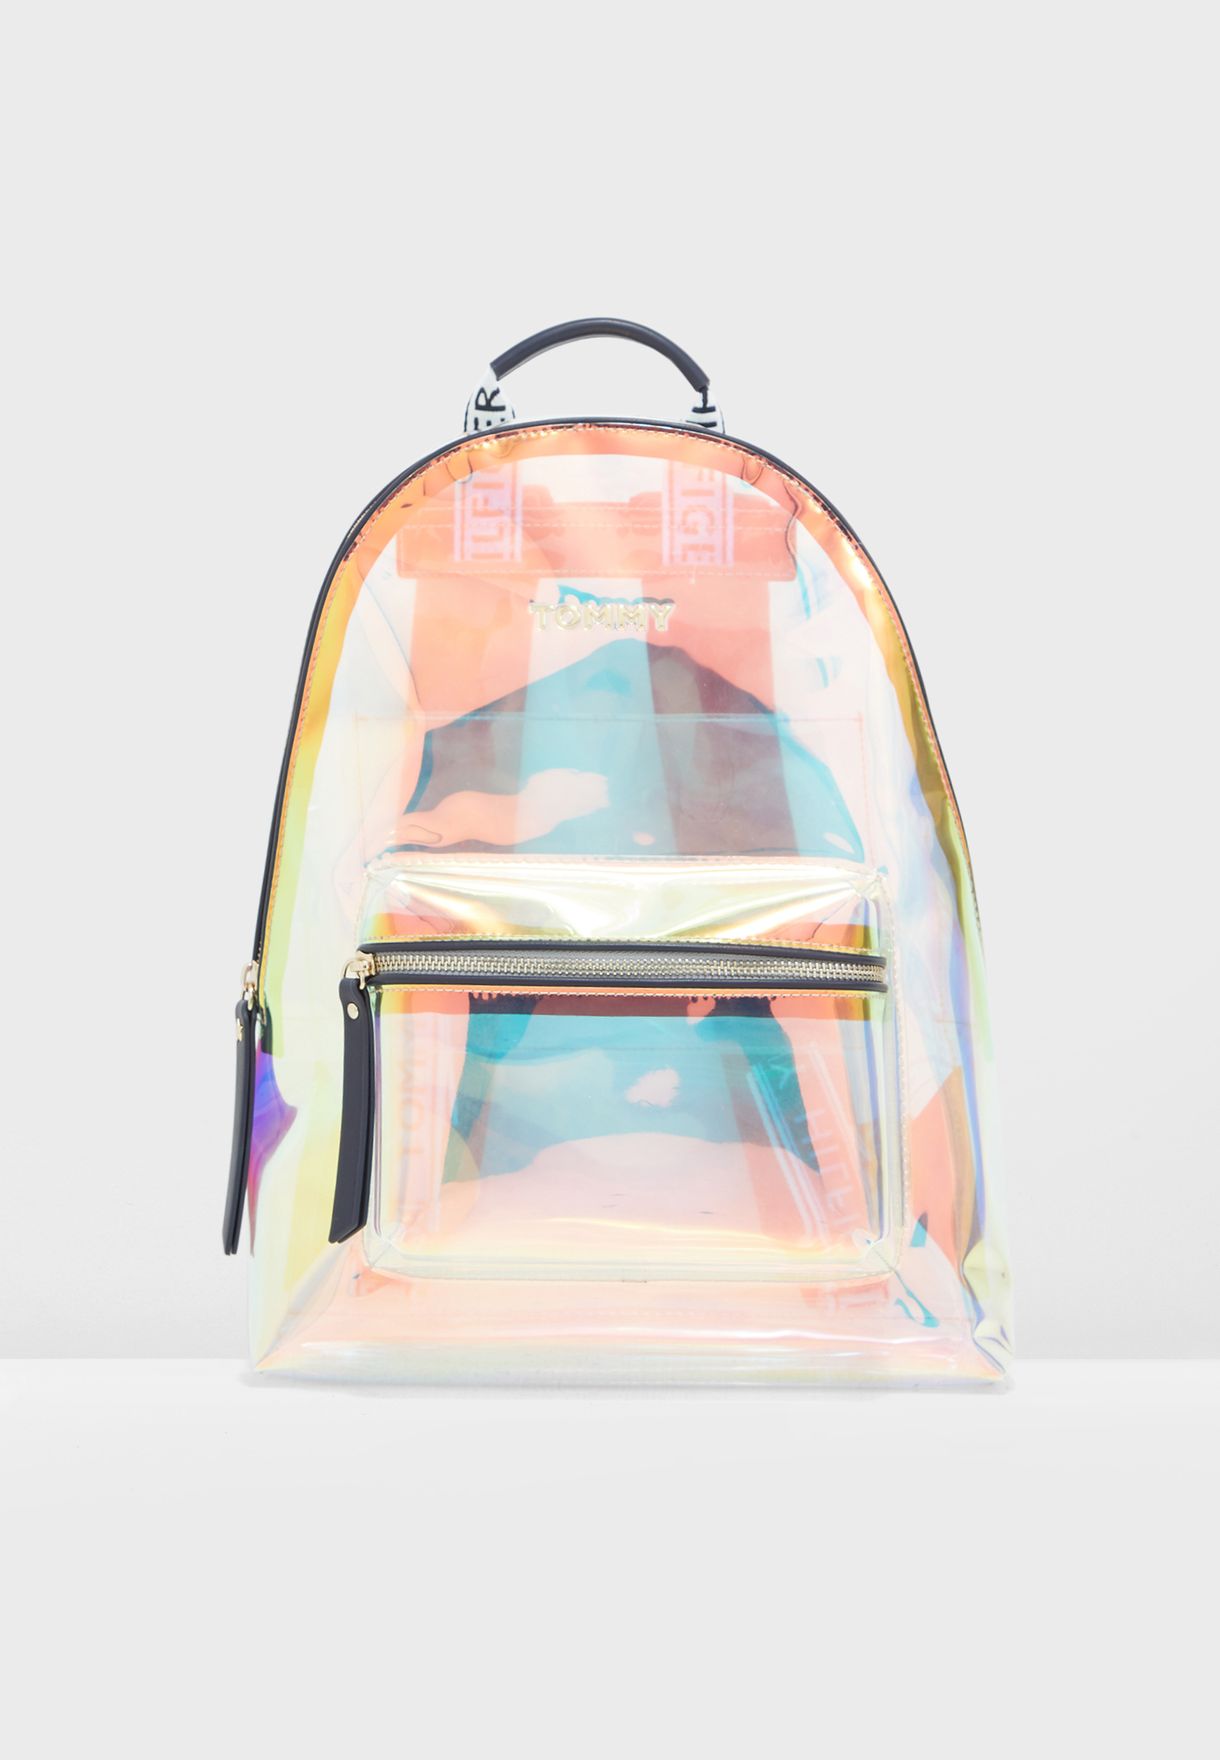 tommy hilfiger holographic backpack